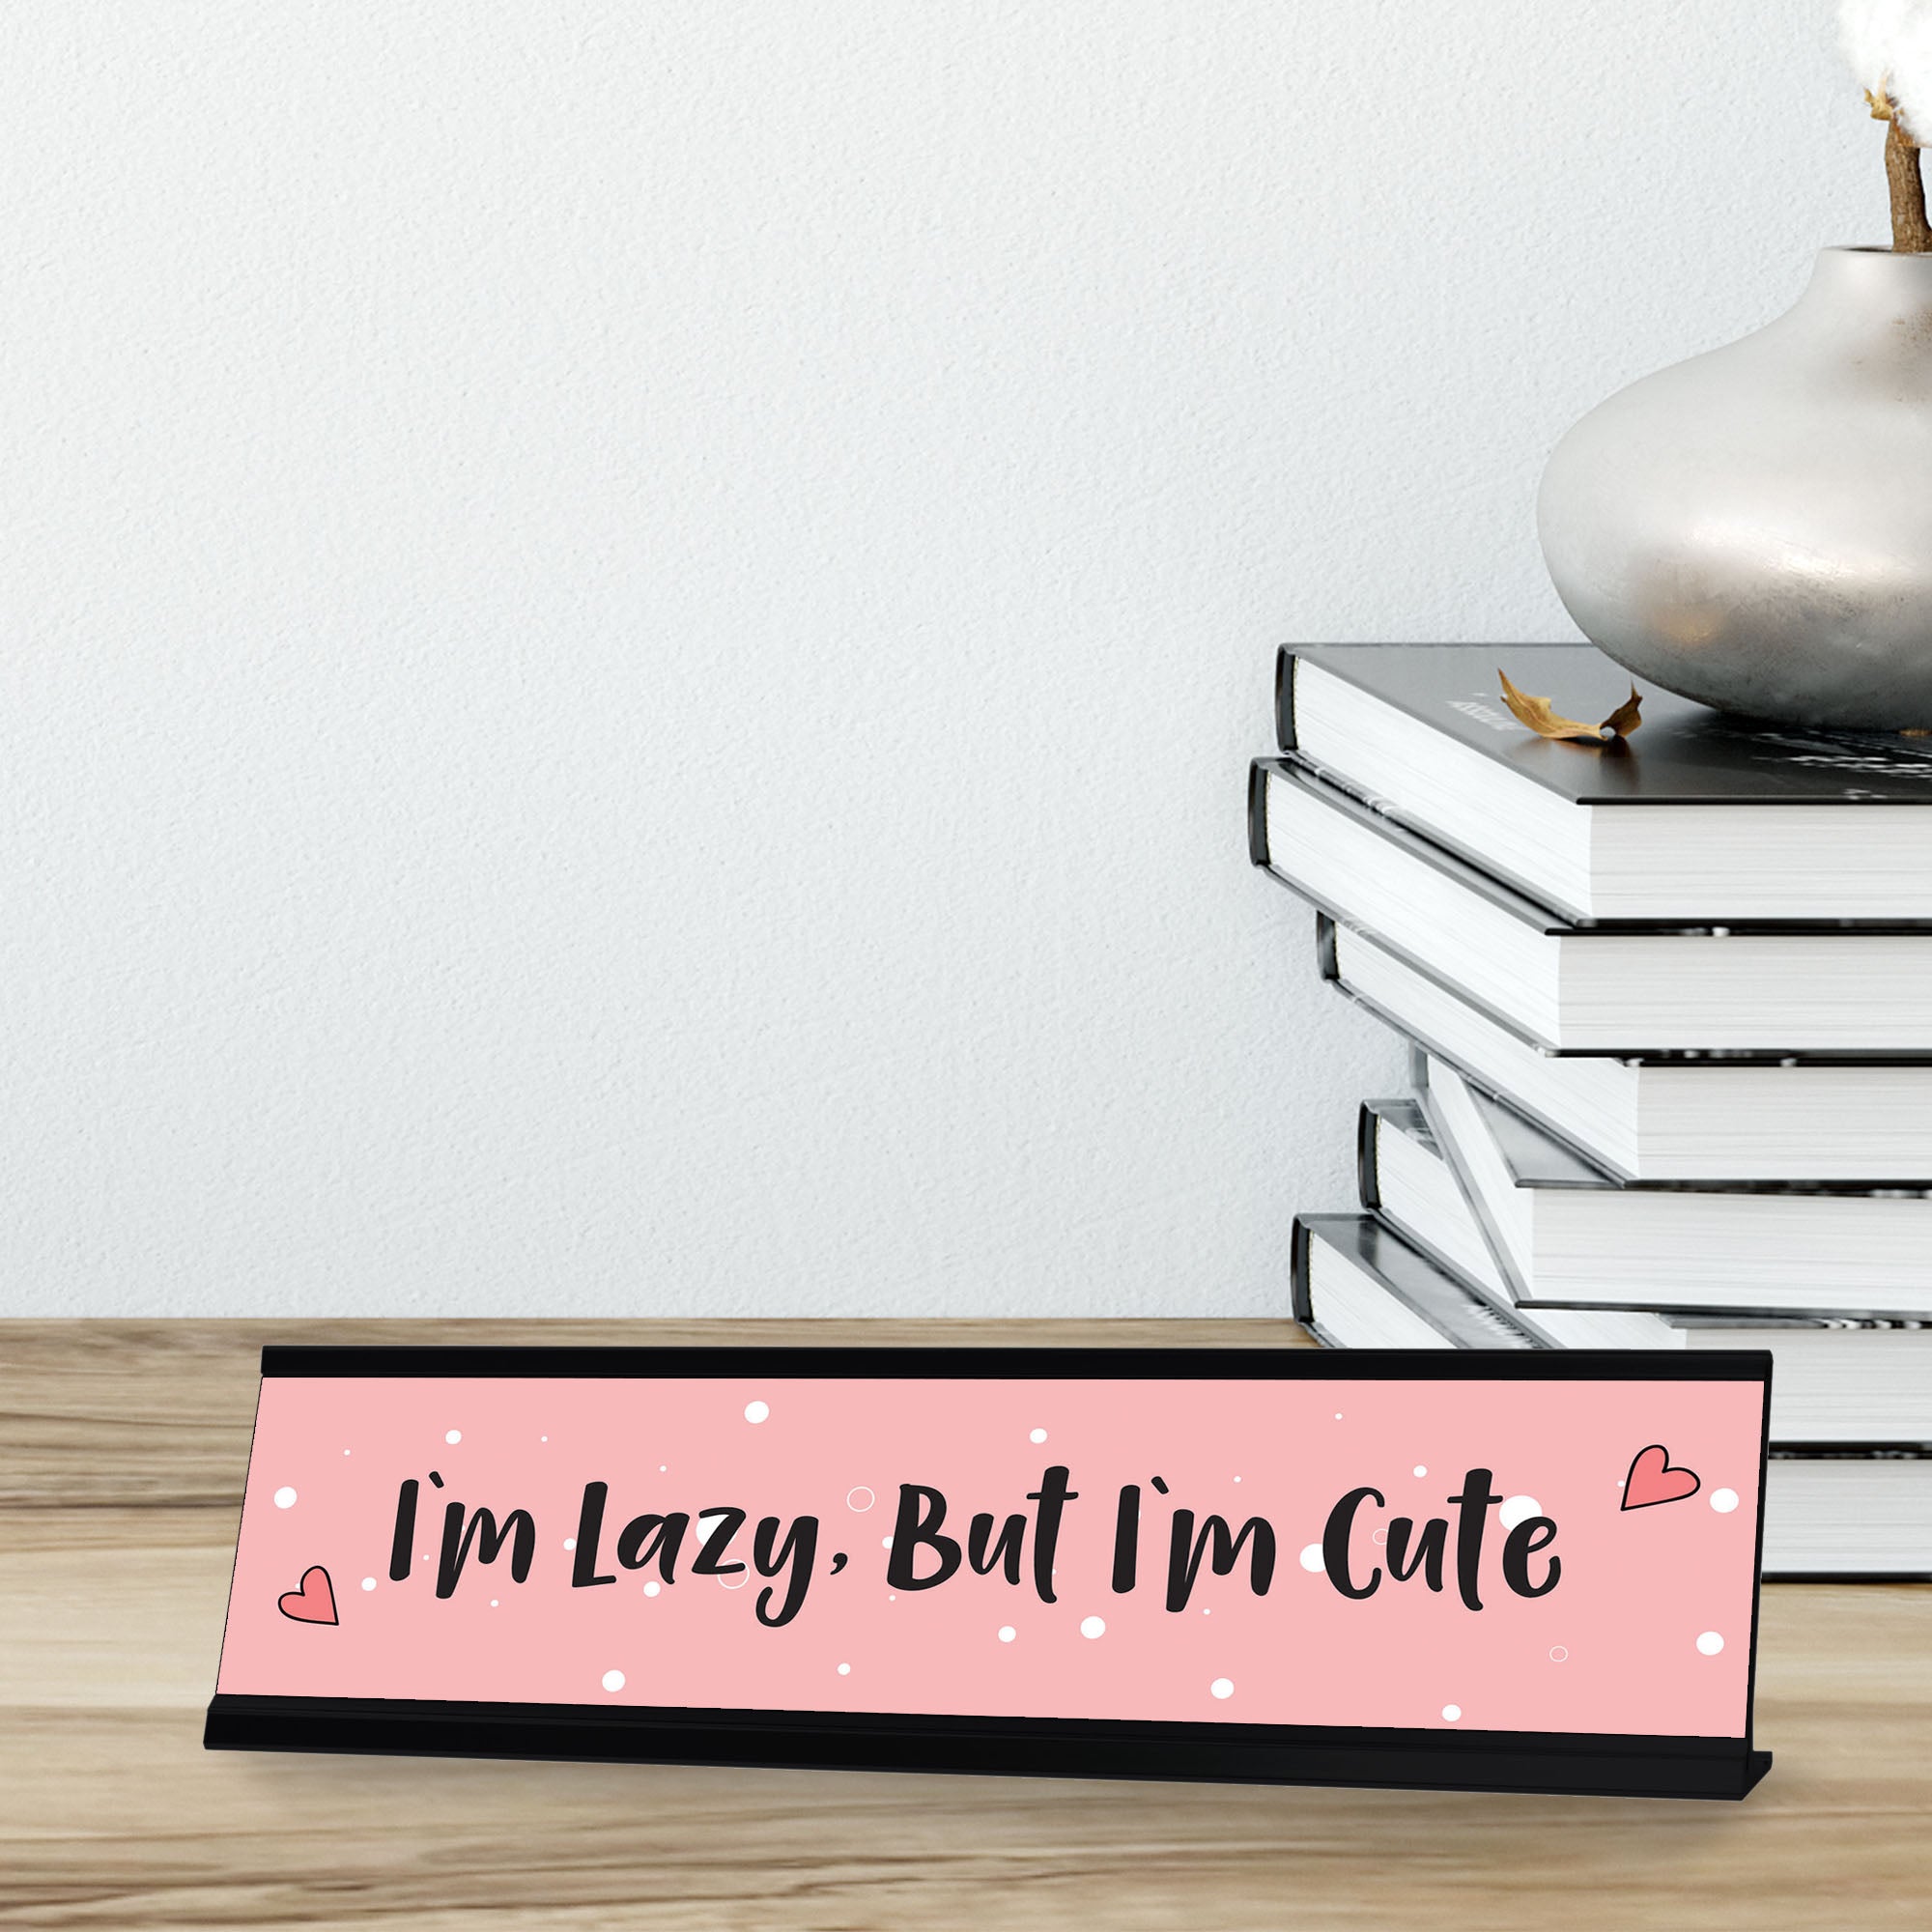 I'm Lazy, But I'm Cute, Designer Series Desk Sign (2 x 8")